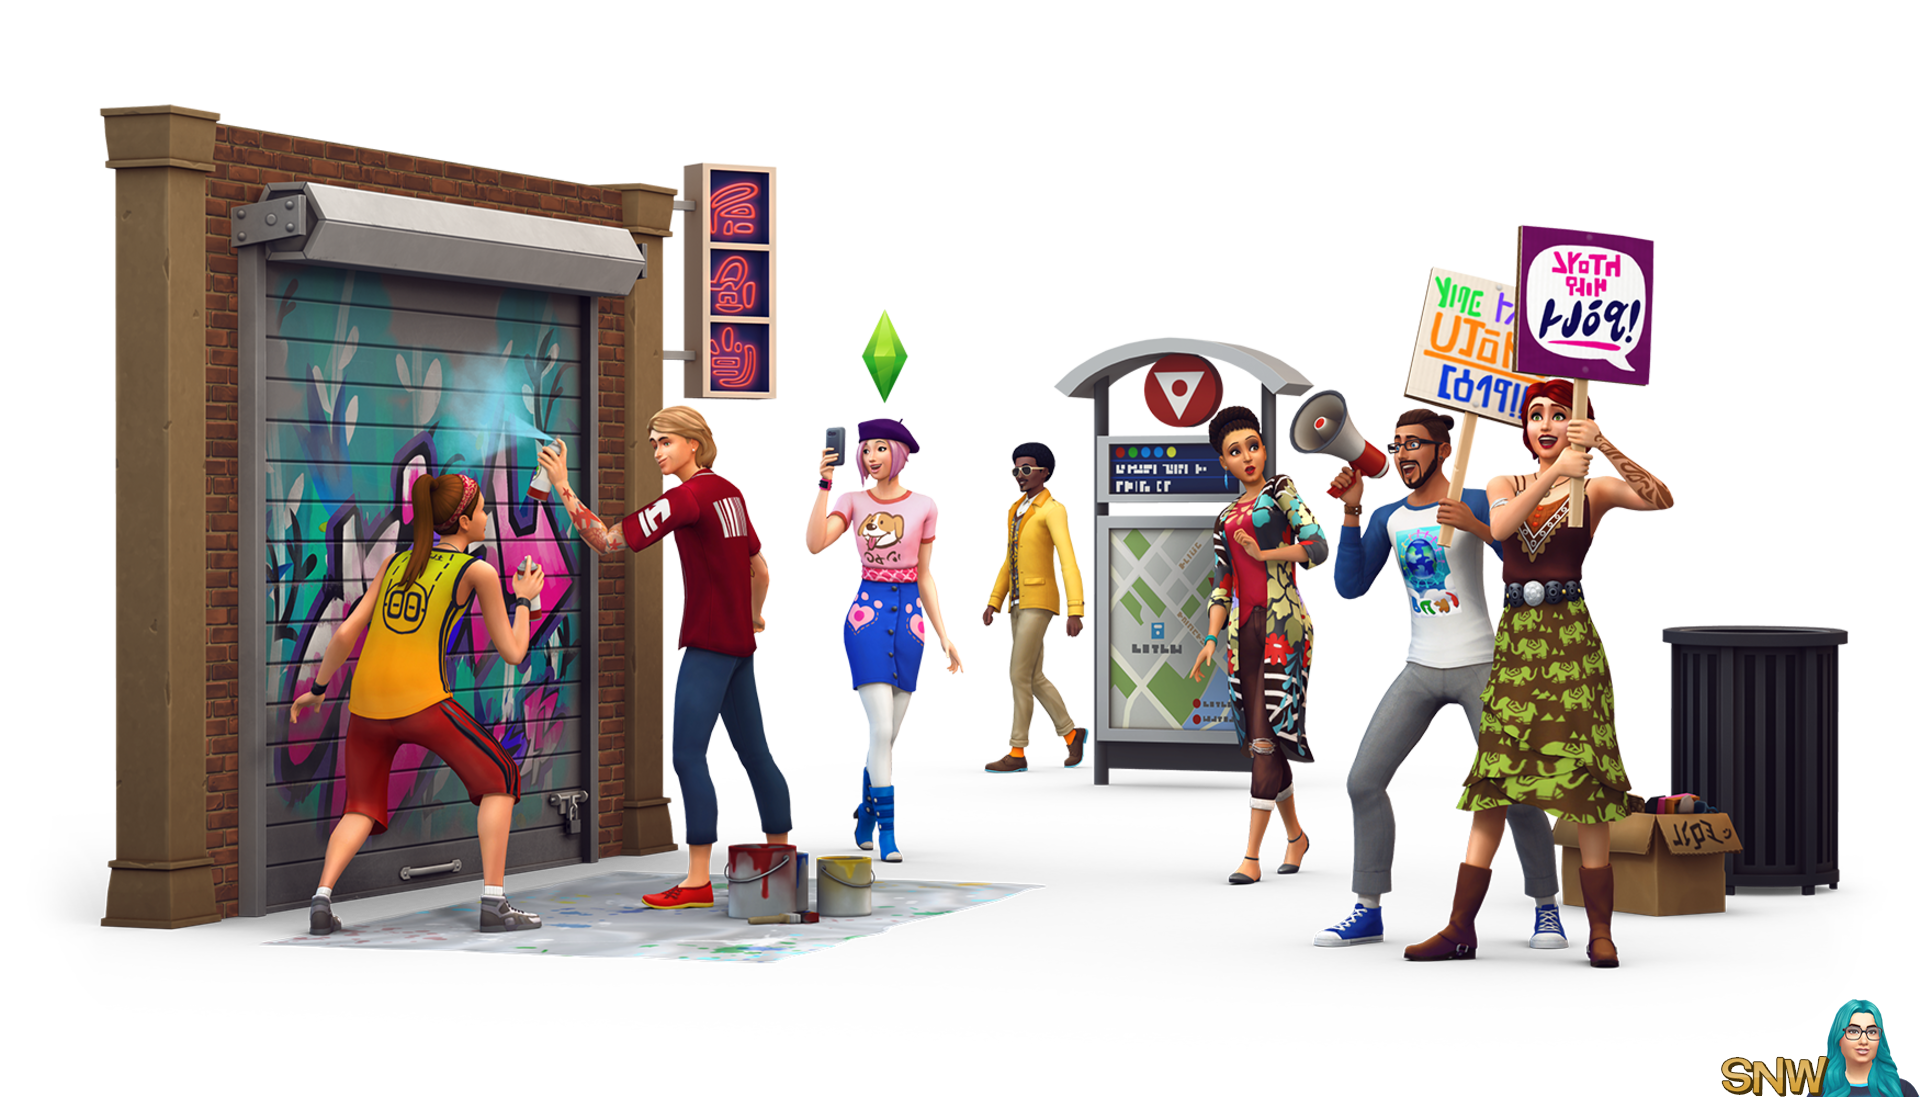 The Sims 4: City Living render / De Sims 4: Stedelijk Leven render